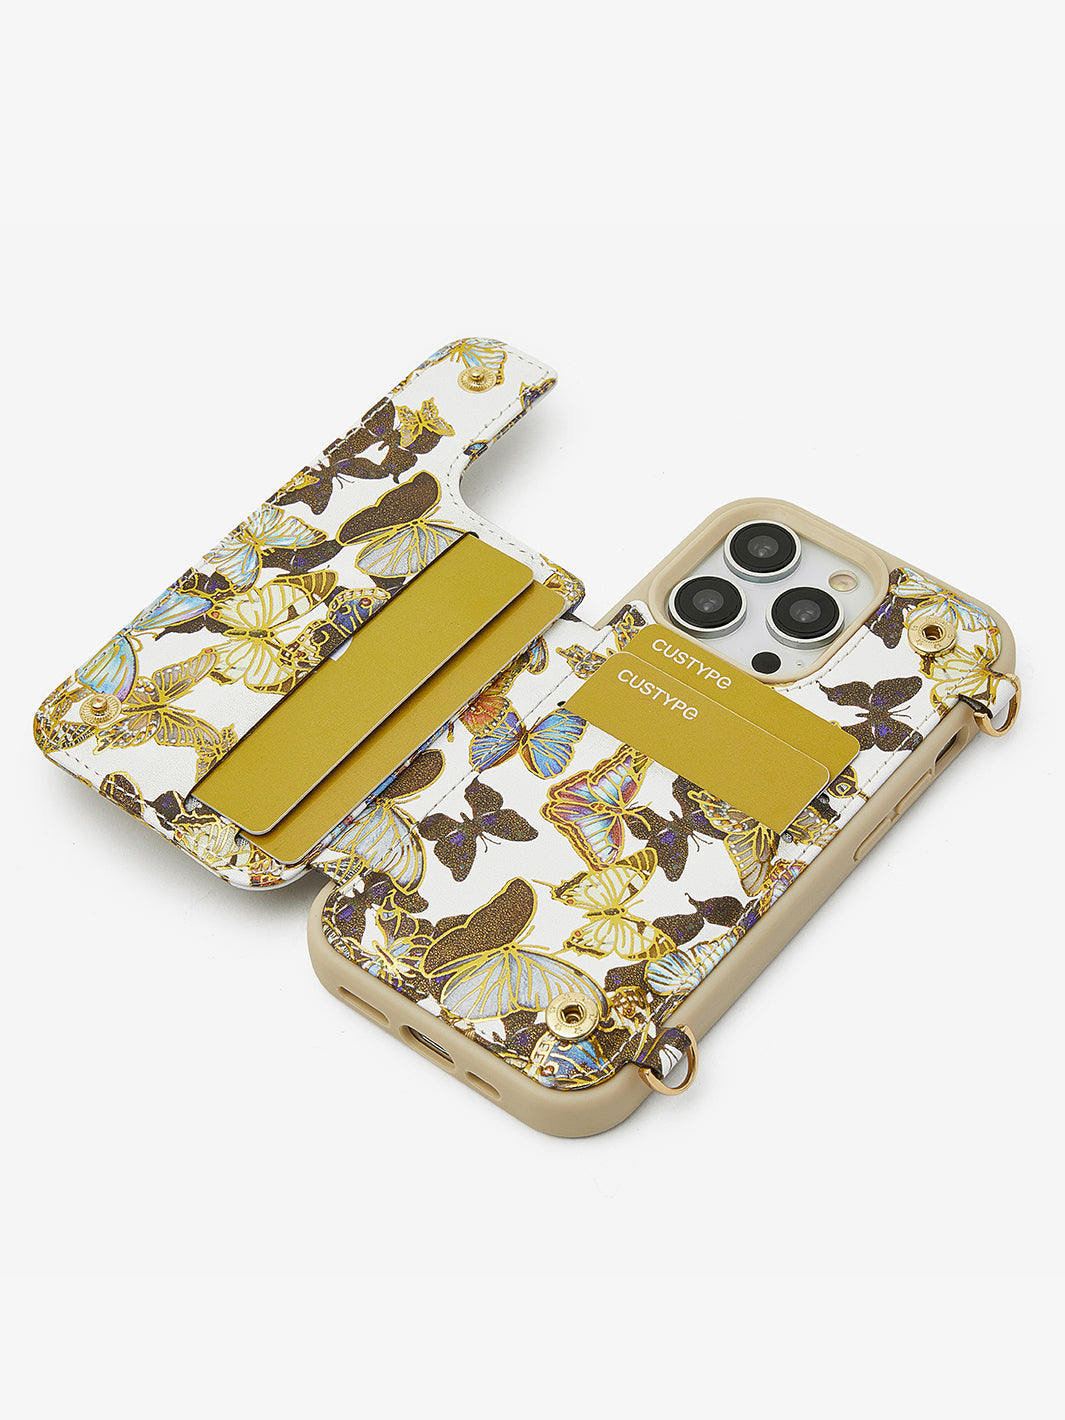 PocketMate - Stunning Wallet Phone Case